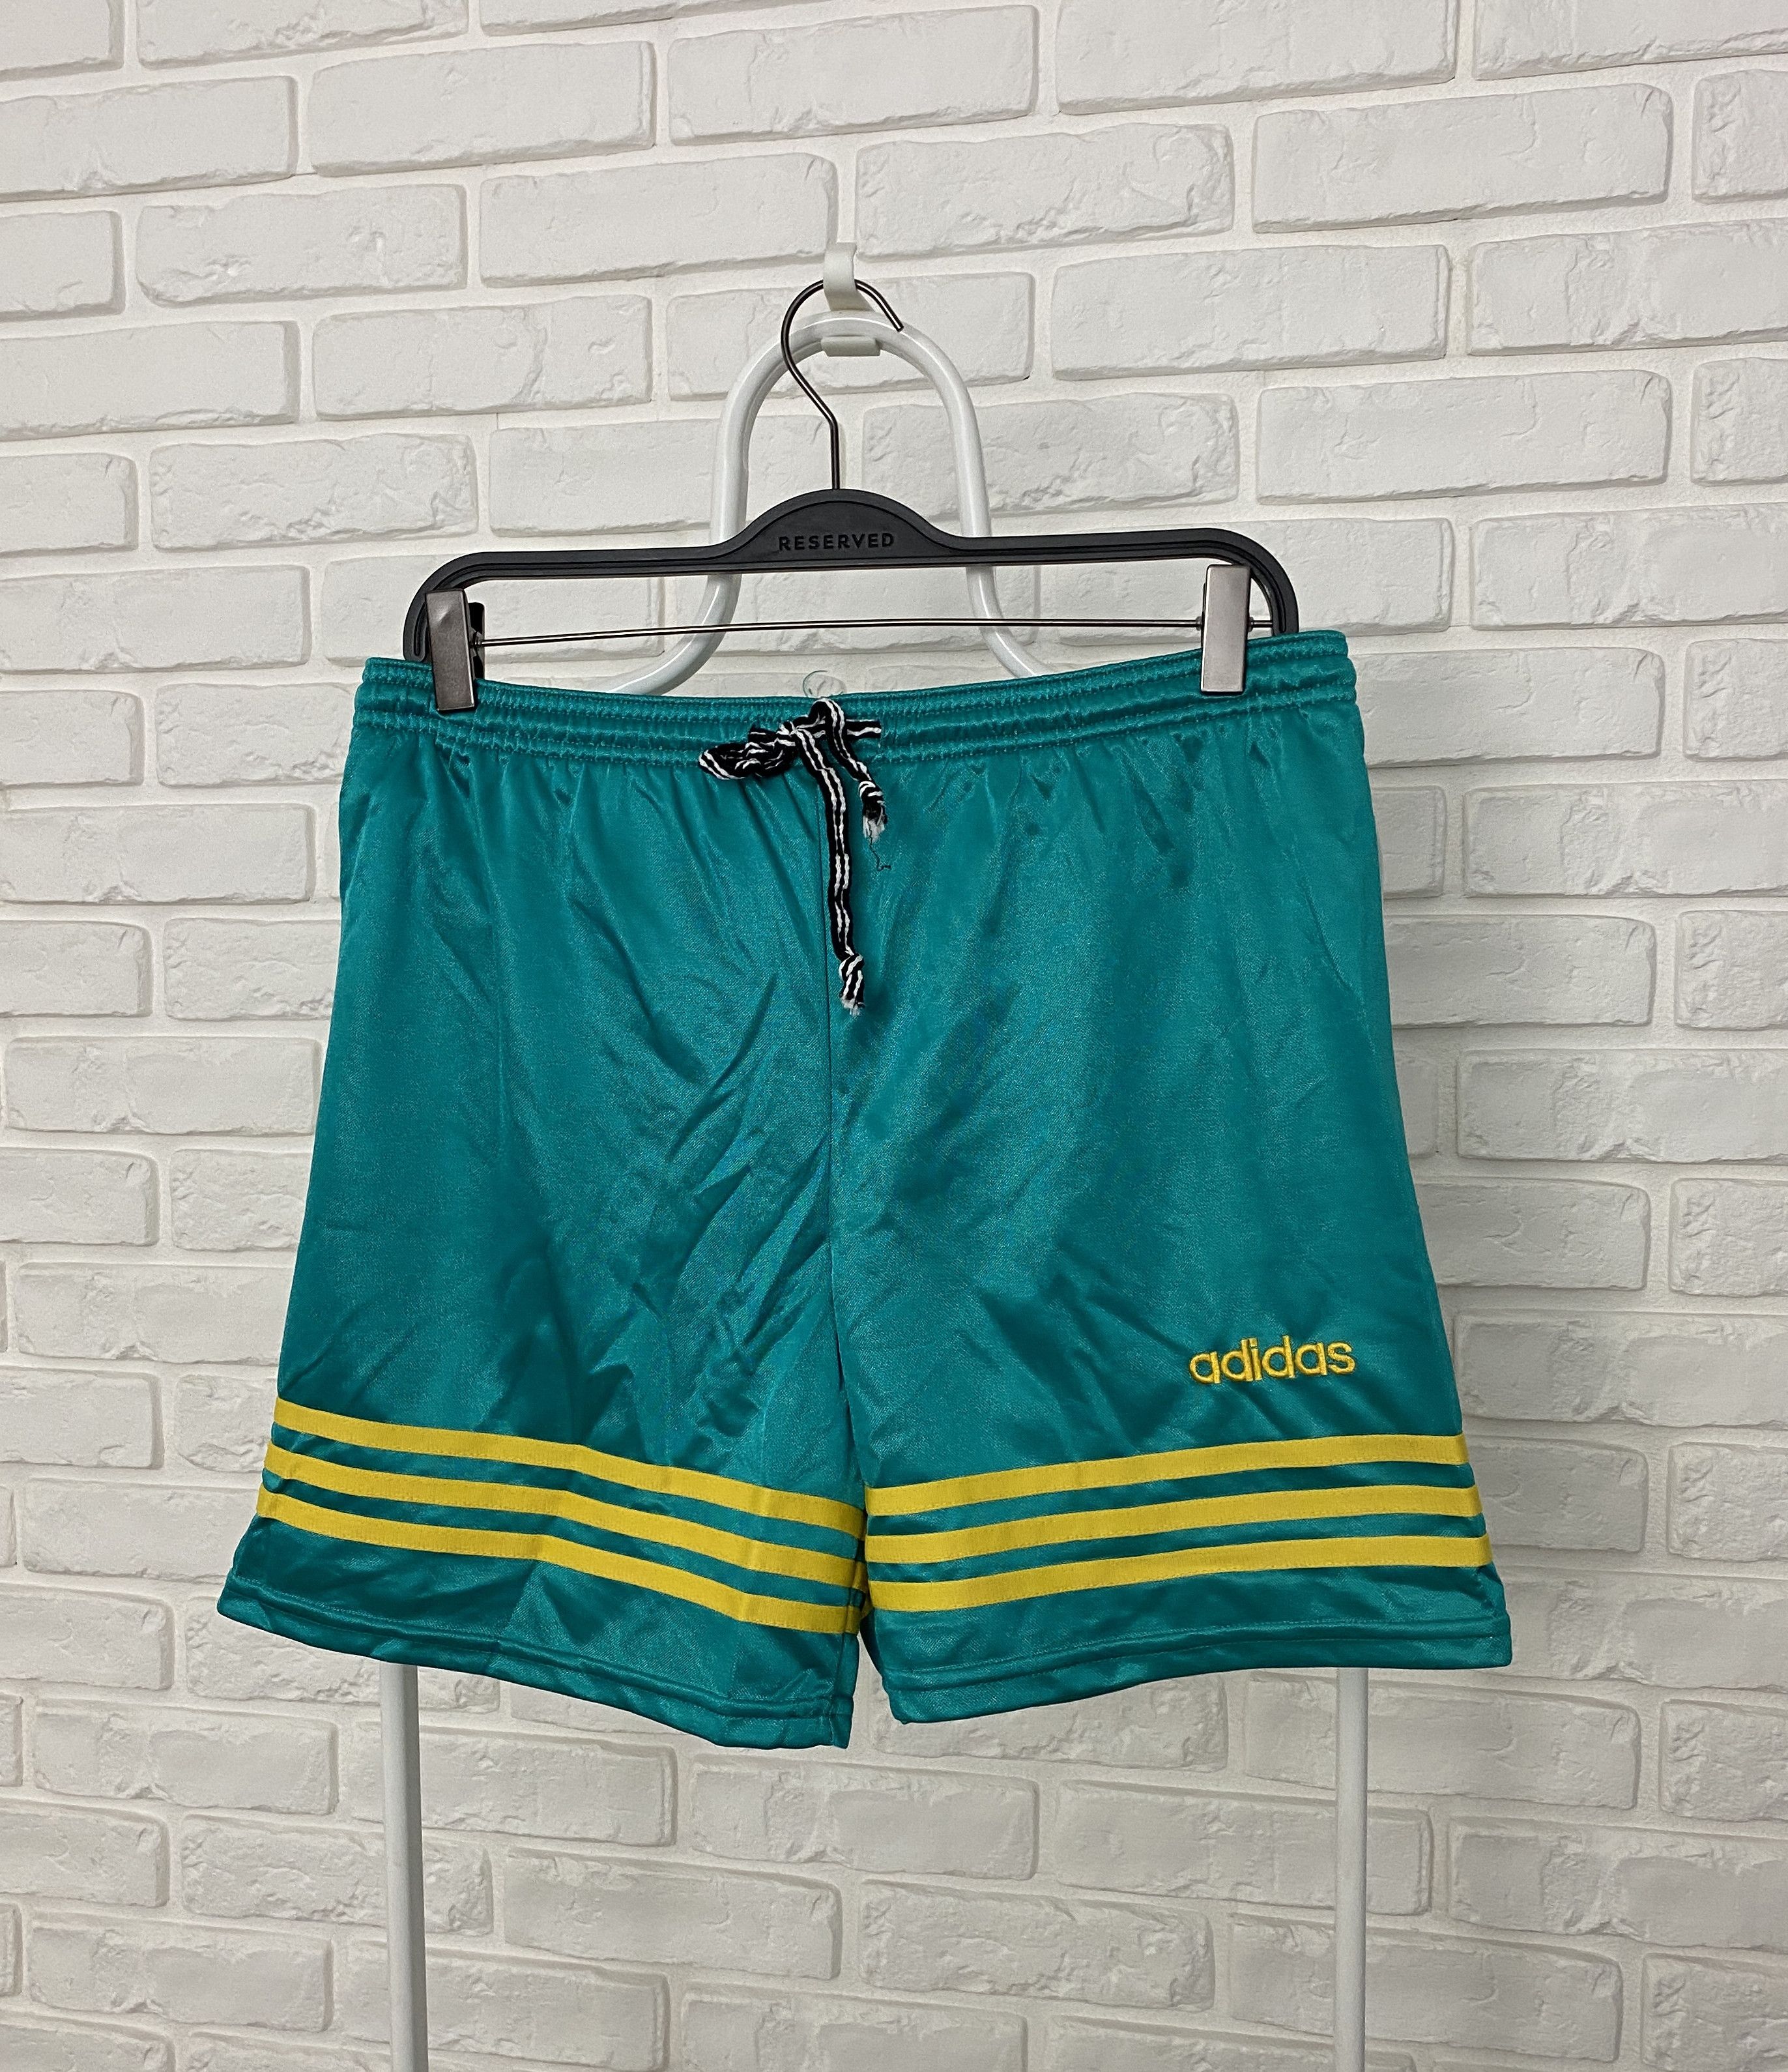 Adidas Retro Adidas 90s Nylon Shorts Soccer Size M Small Logo Size US 32 / EU 48 - 2 Preview